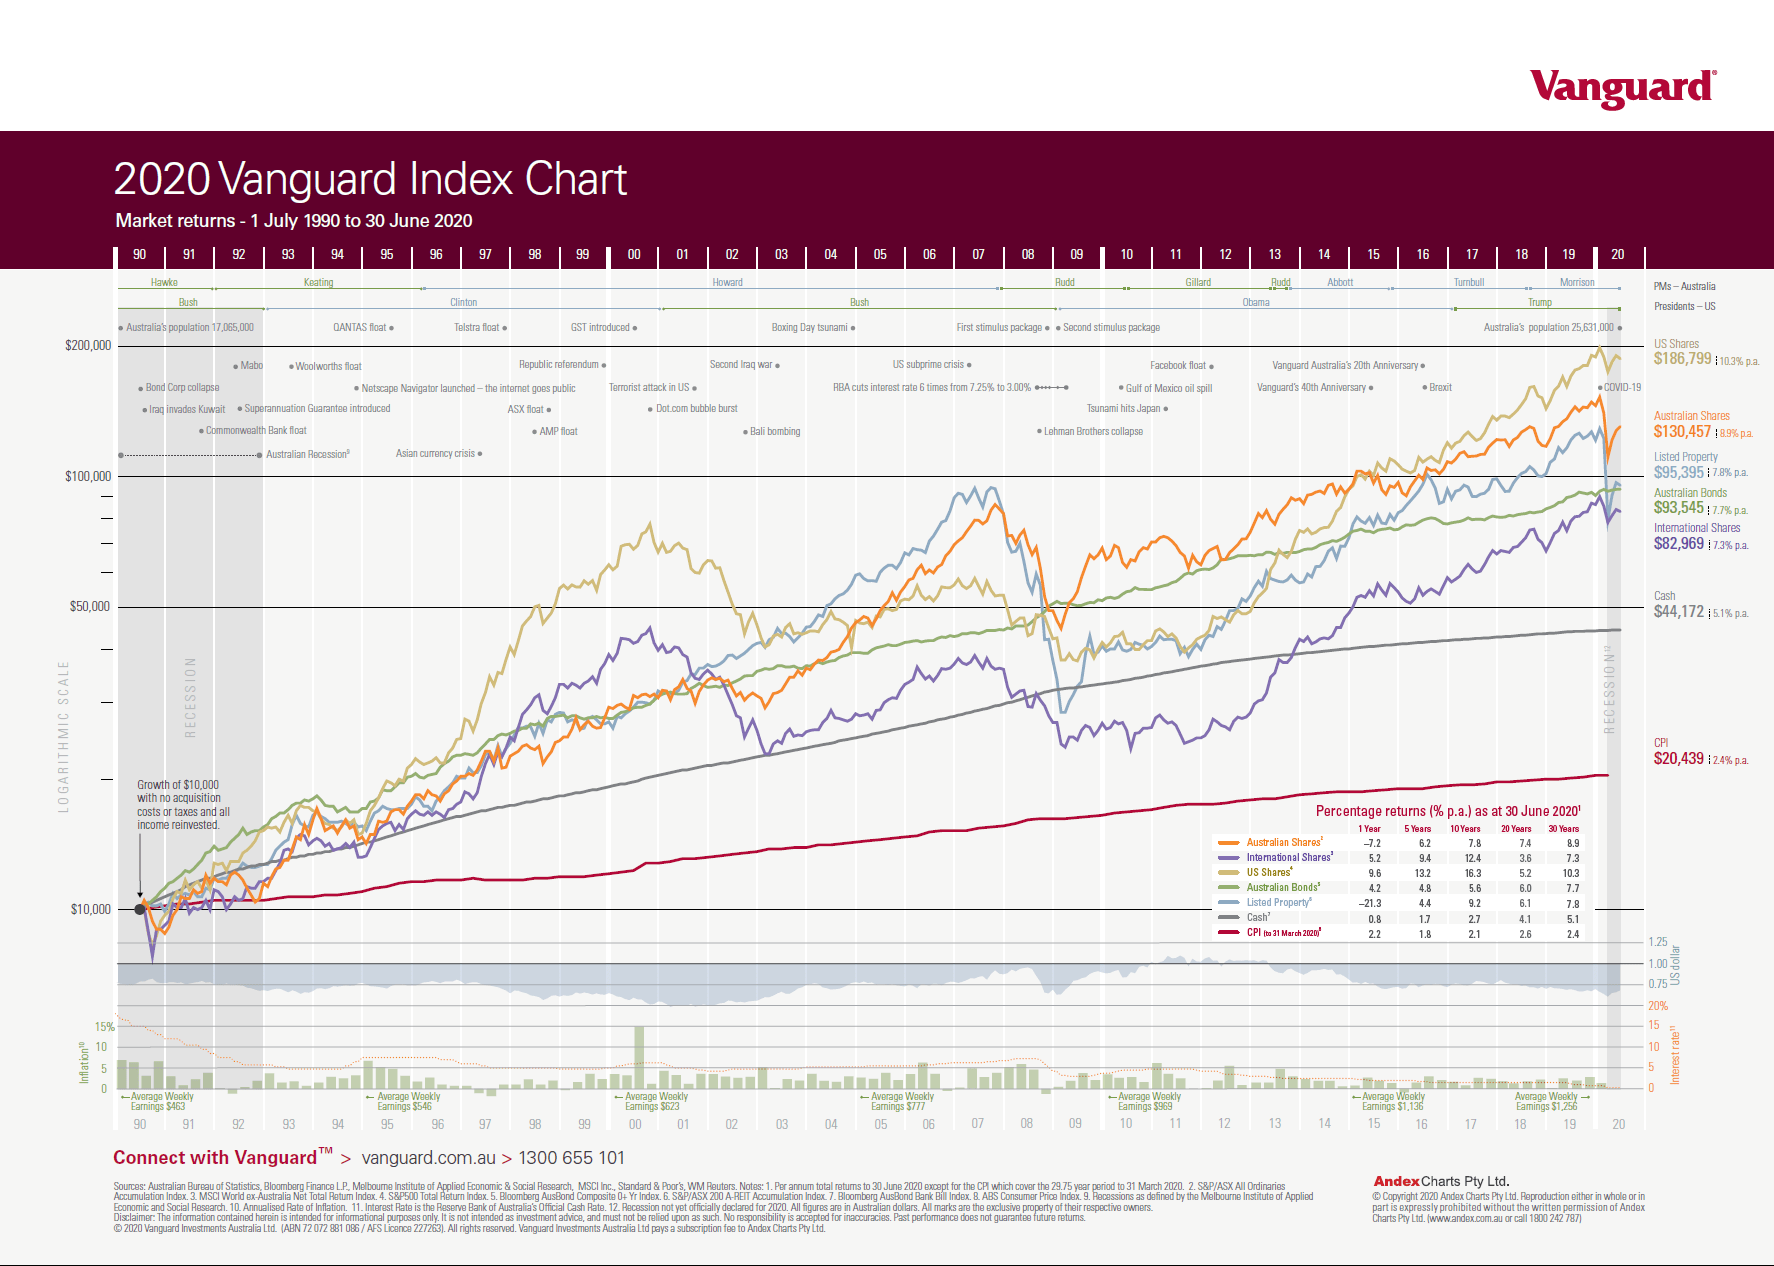 The 2020 Vanguard Index Chart Australian Edition